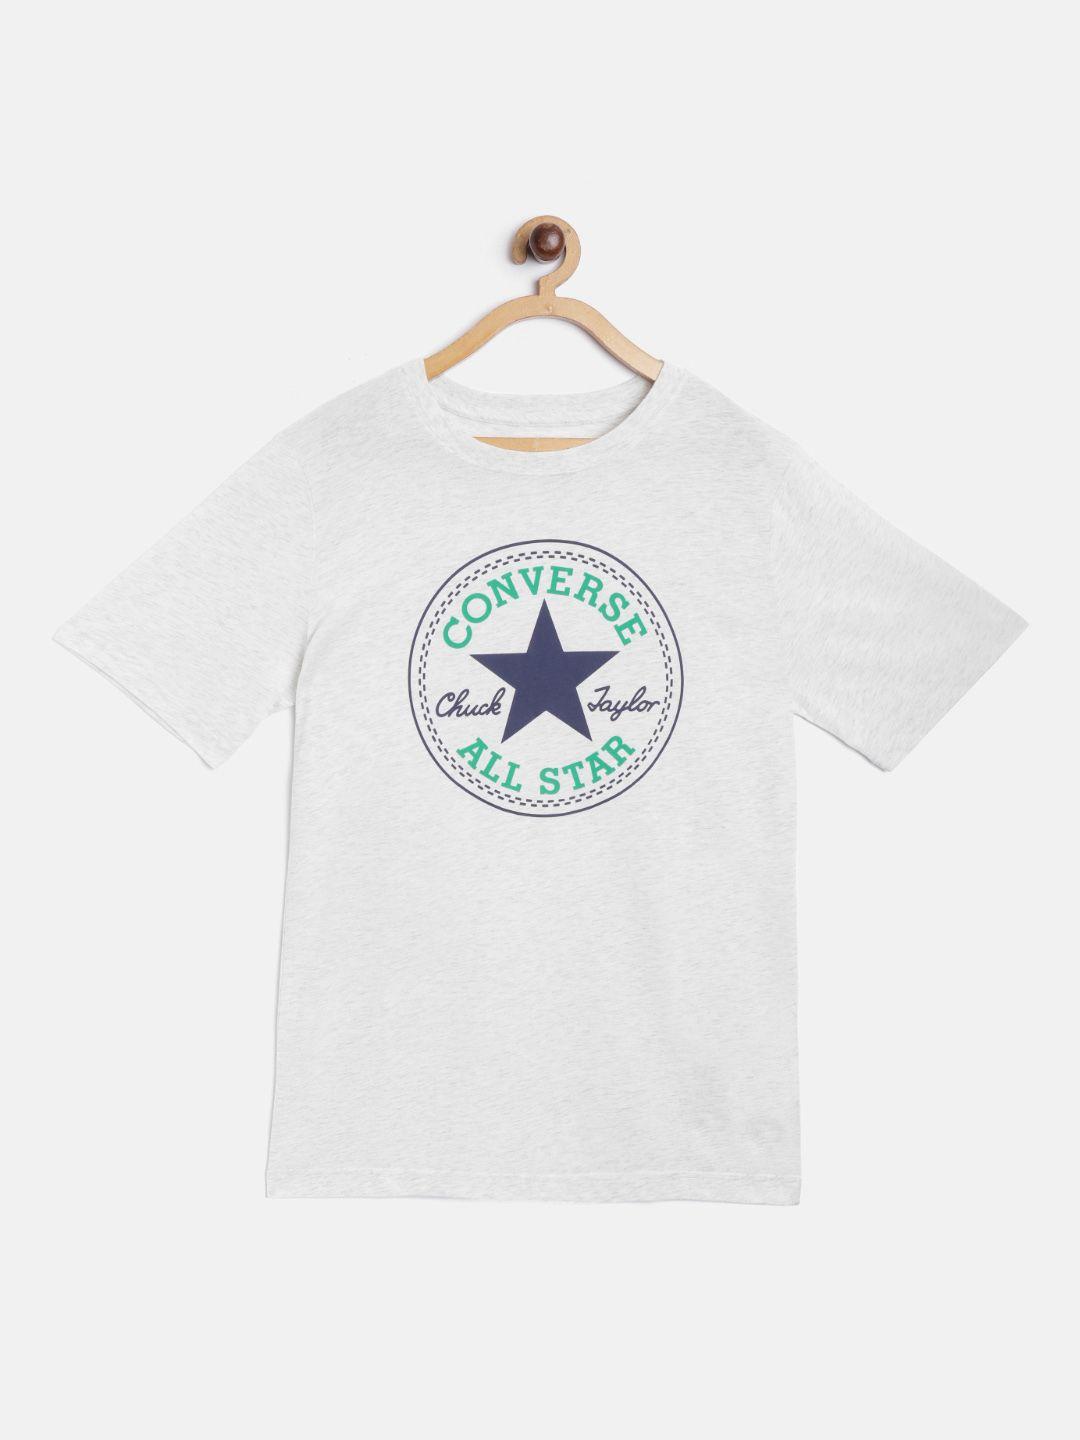 Converse Boys Grey Melange Chuck Taylor All Star Print Round Neck T-shirt